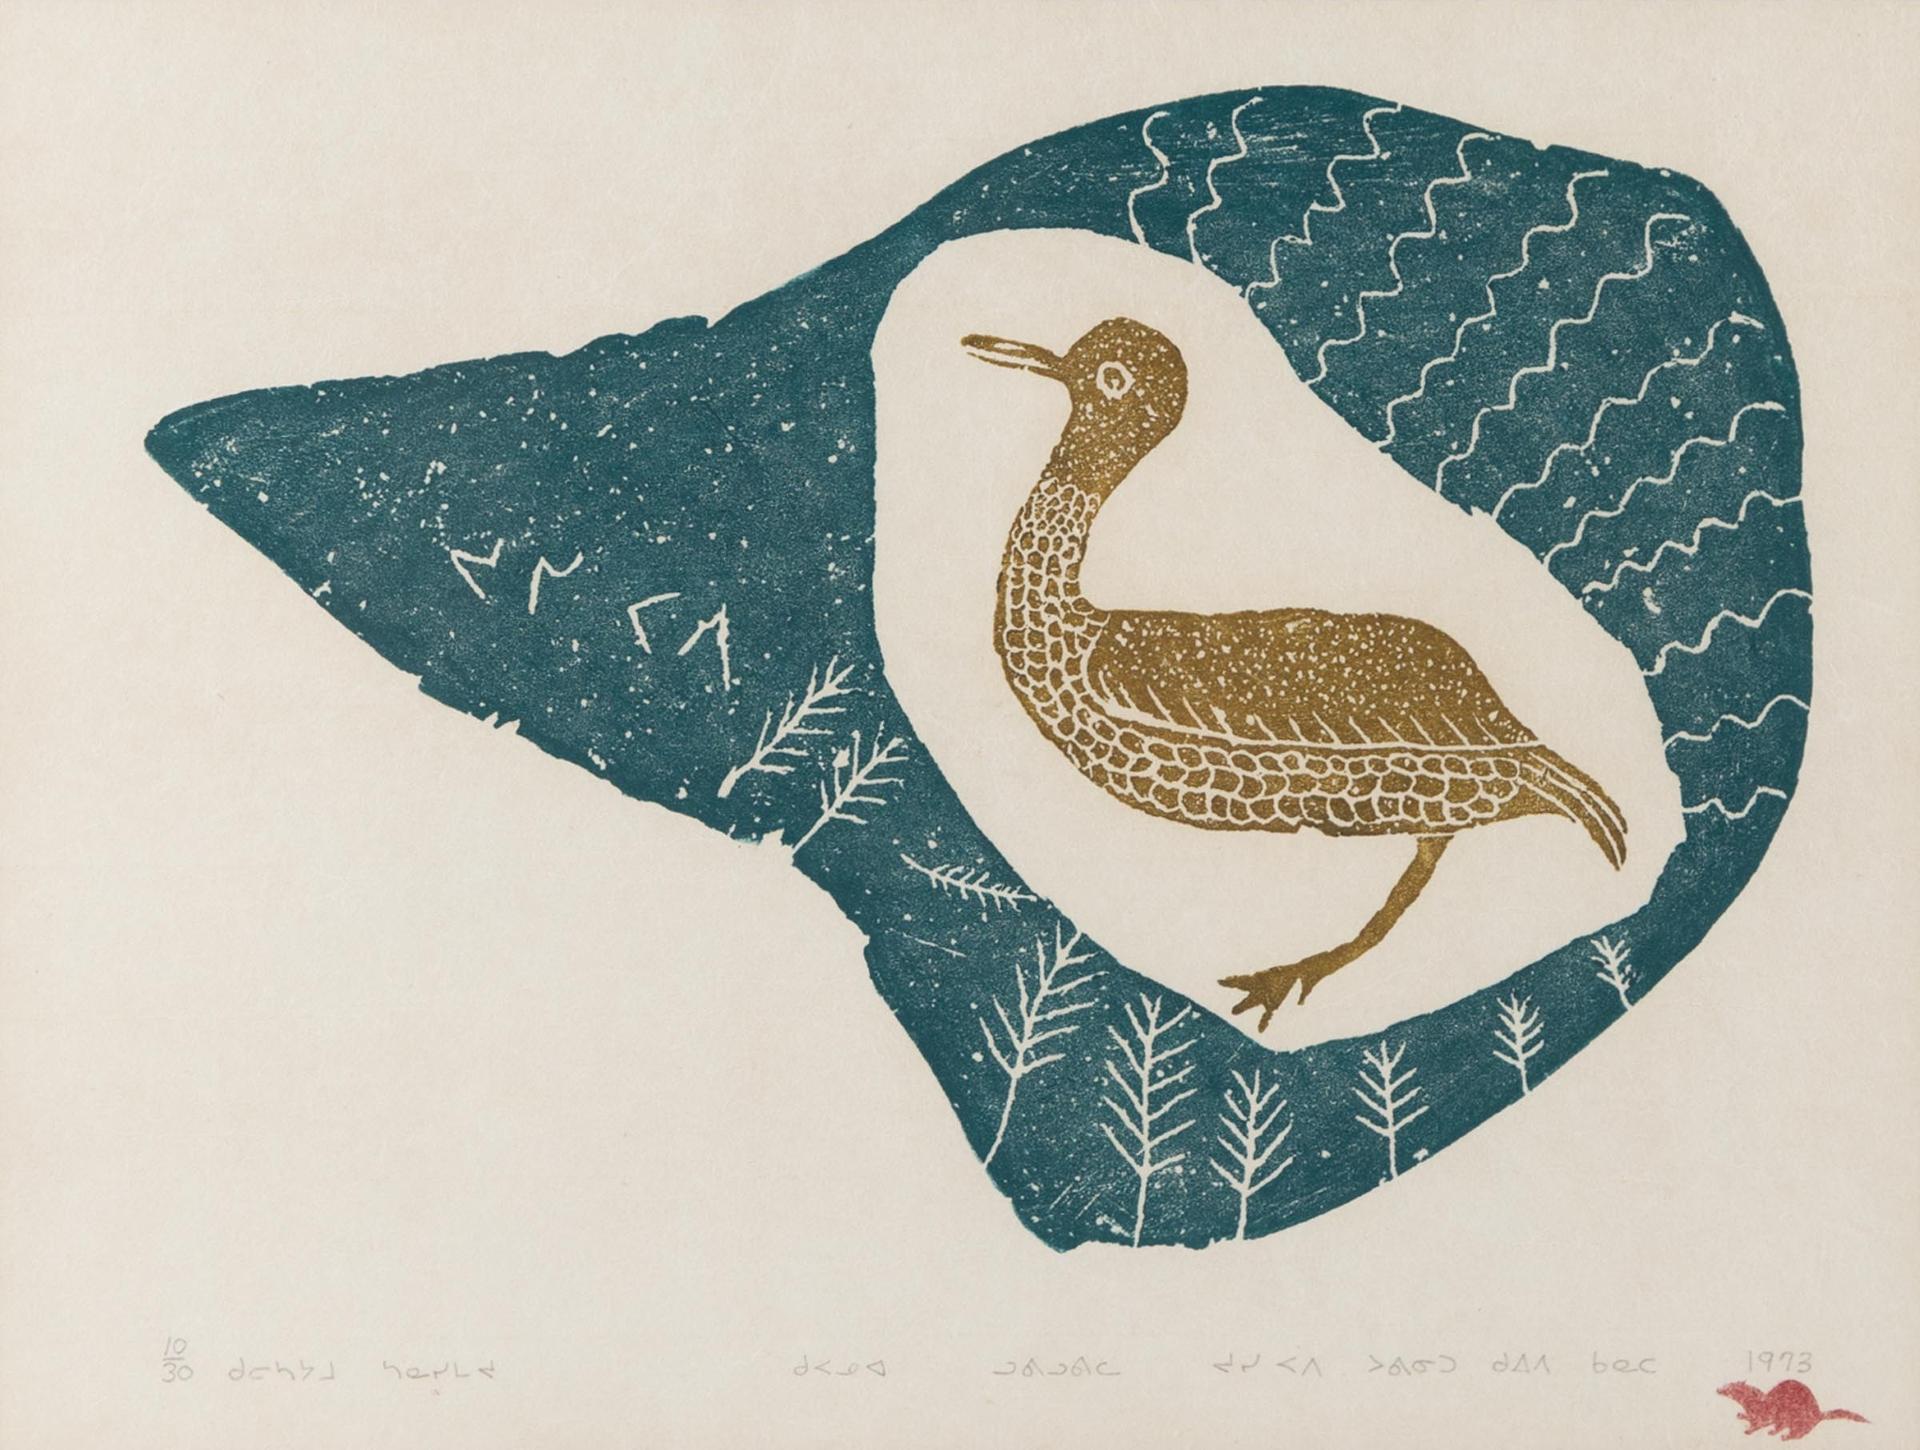 Josie Paperk - A Small Bird, 1973